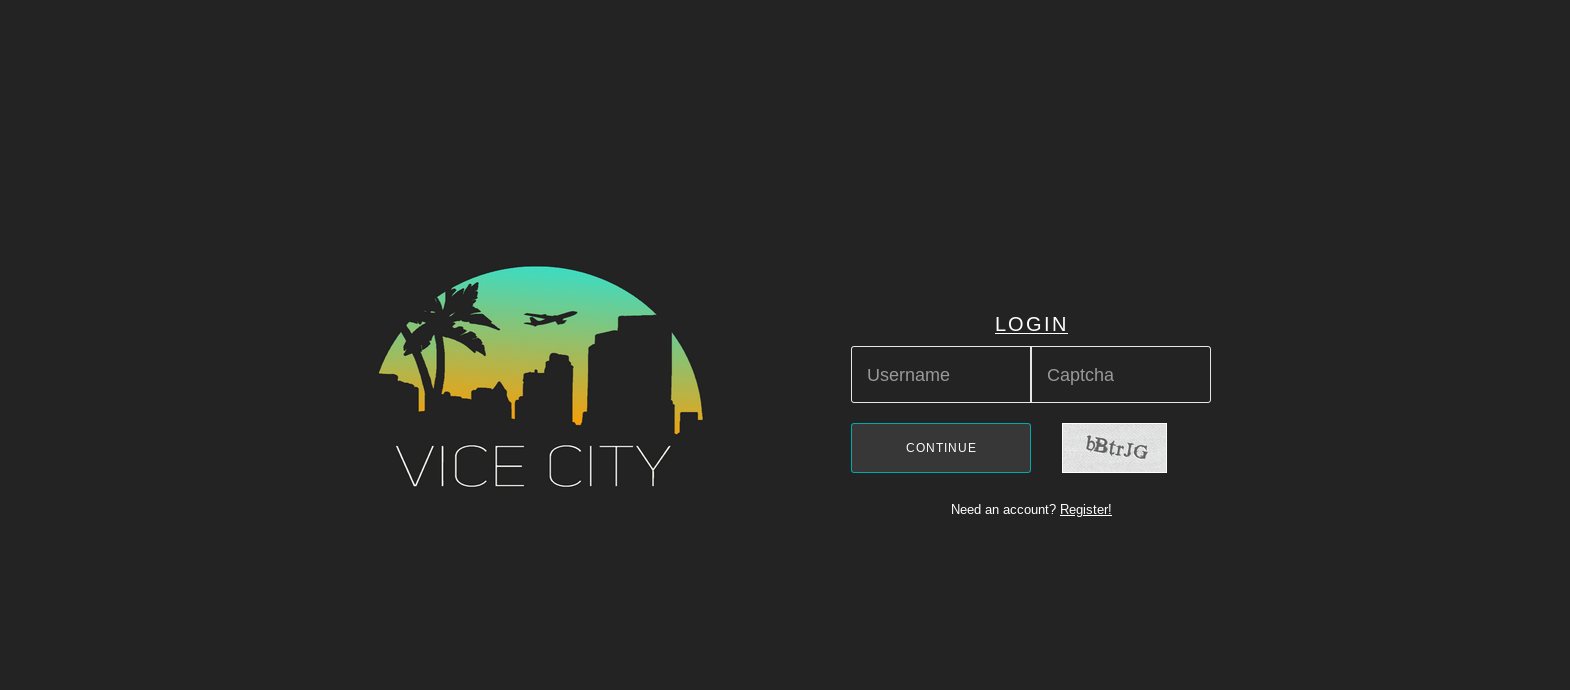 Vice city darknet market